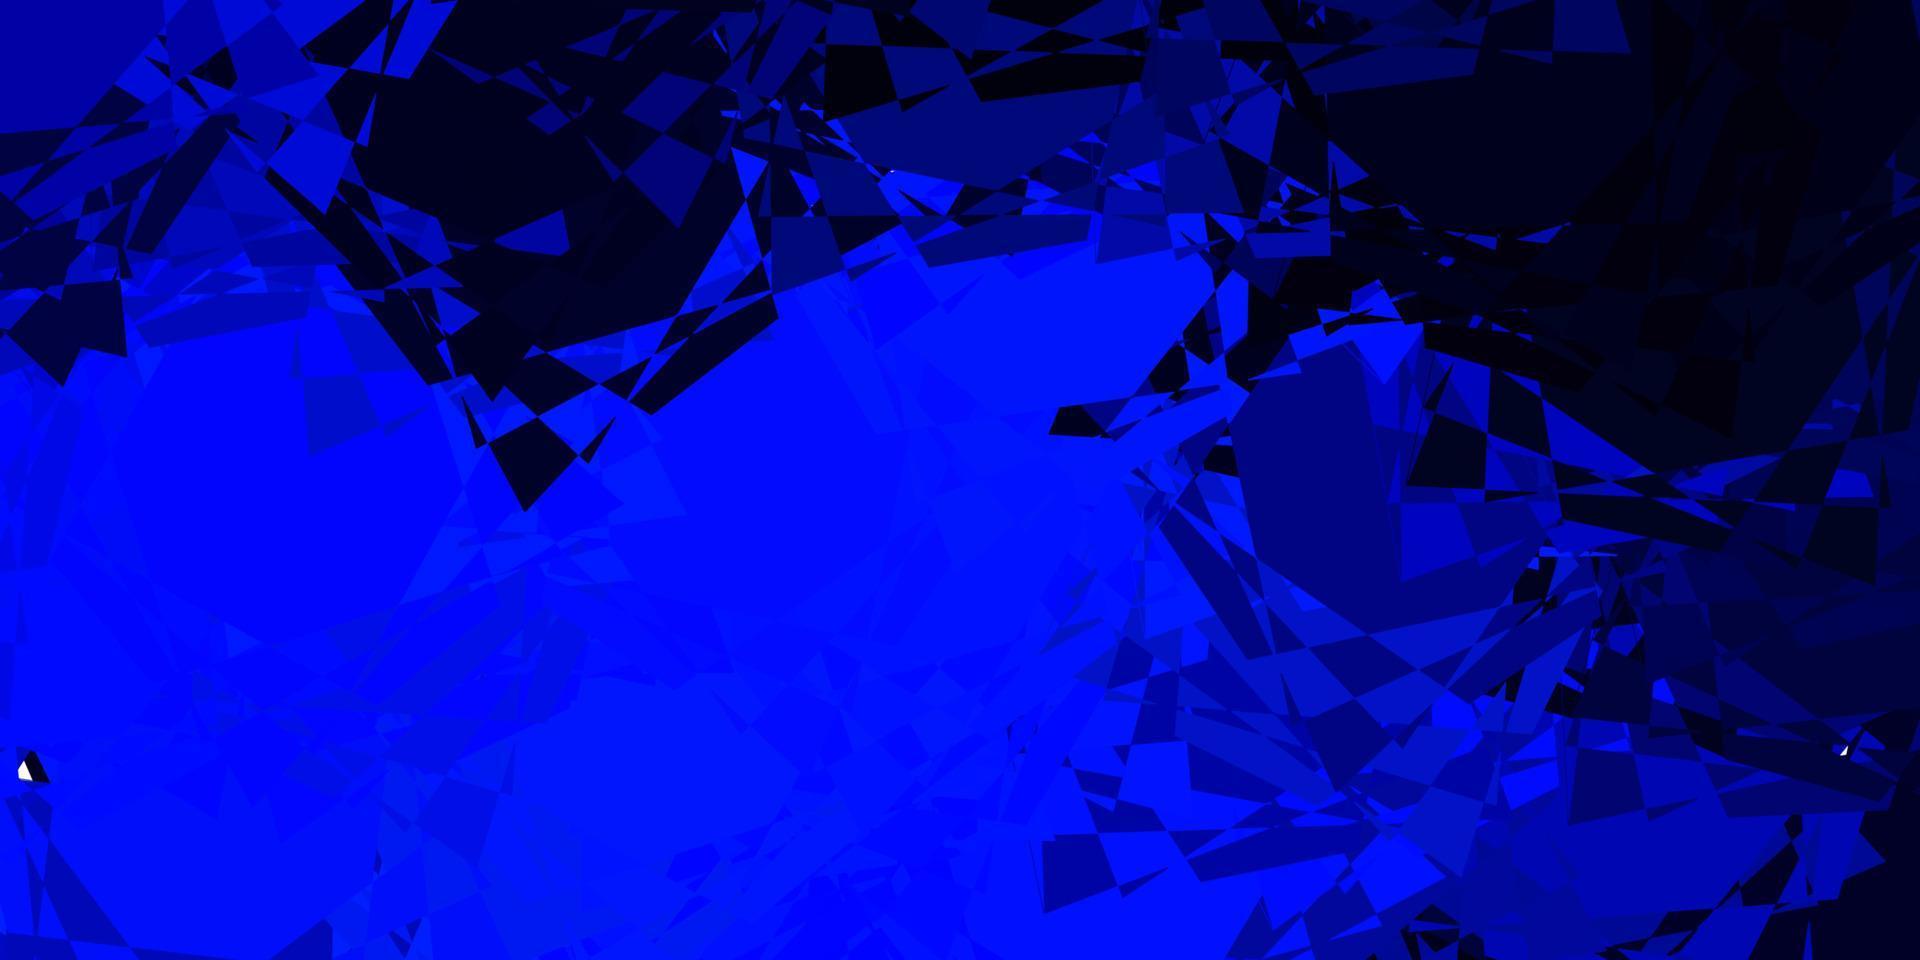 layout de vetor de azul escuro com formas de triângulo.